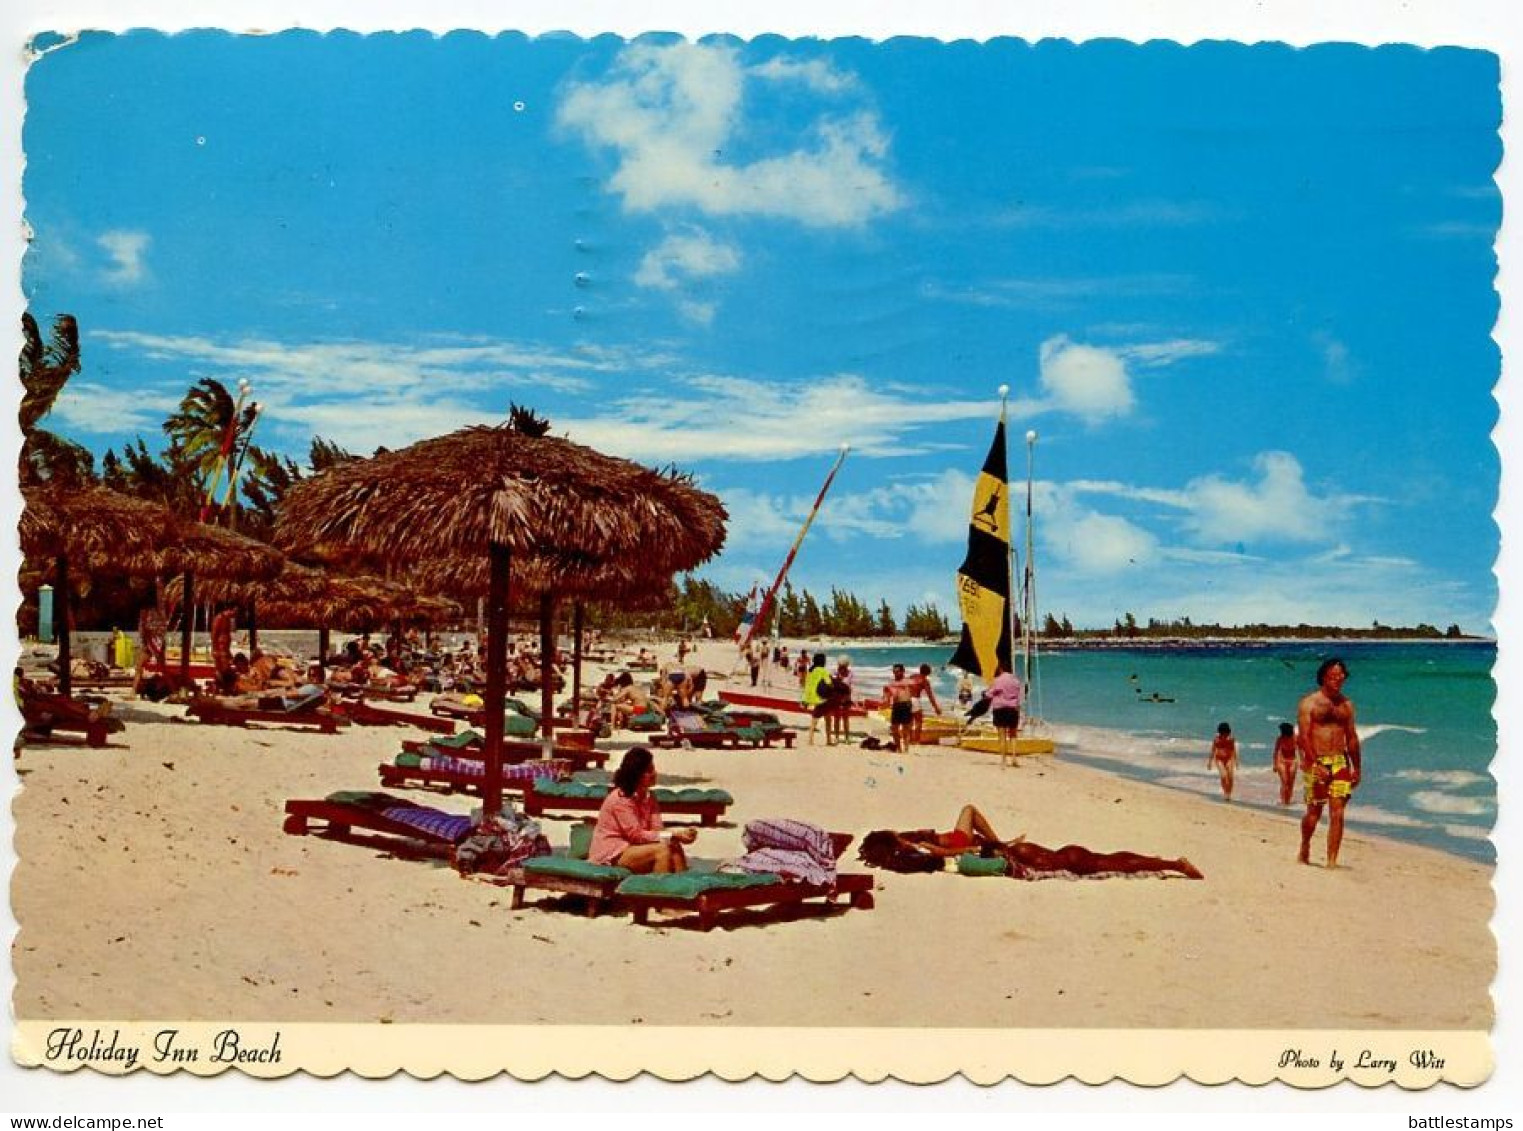 Bahamas 1974 Postcard Holiday Inn Beach - Freeport; 7c. QEII & Hibiscus Flowers Stamps, Pair - Bahama's